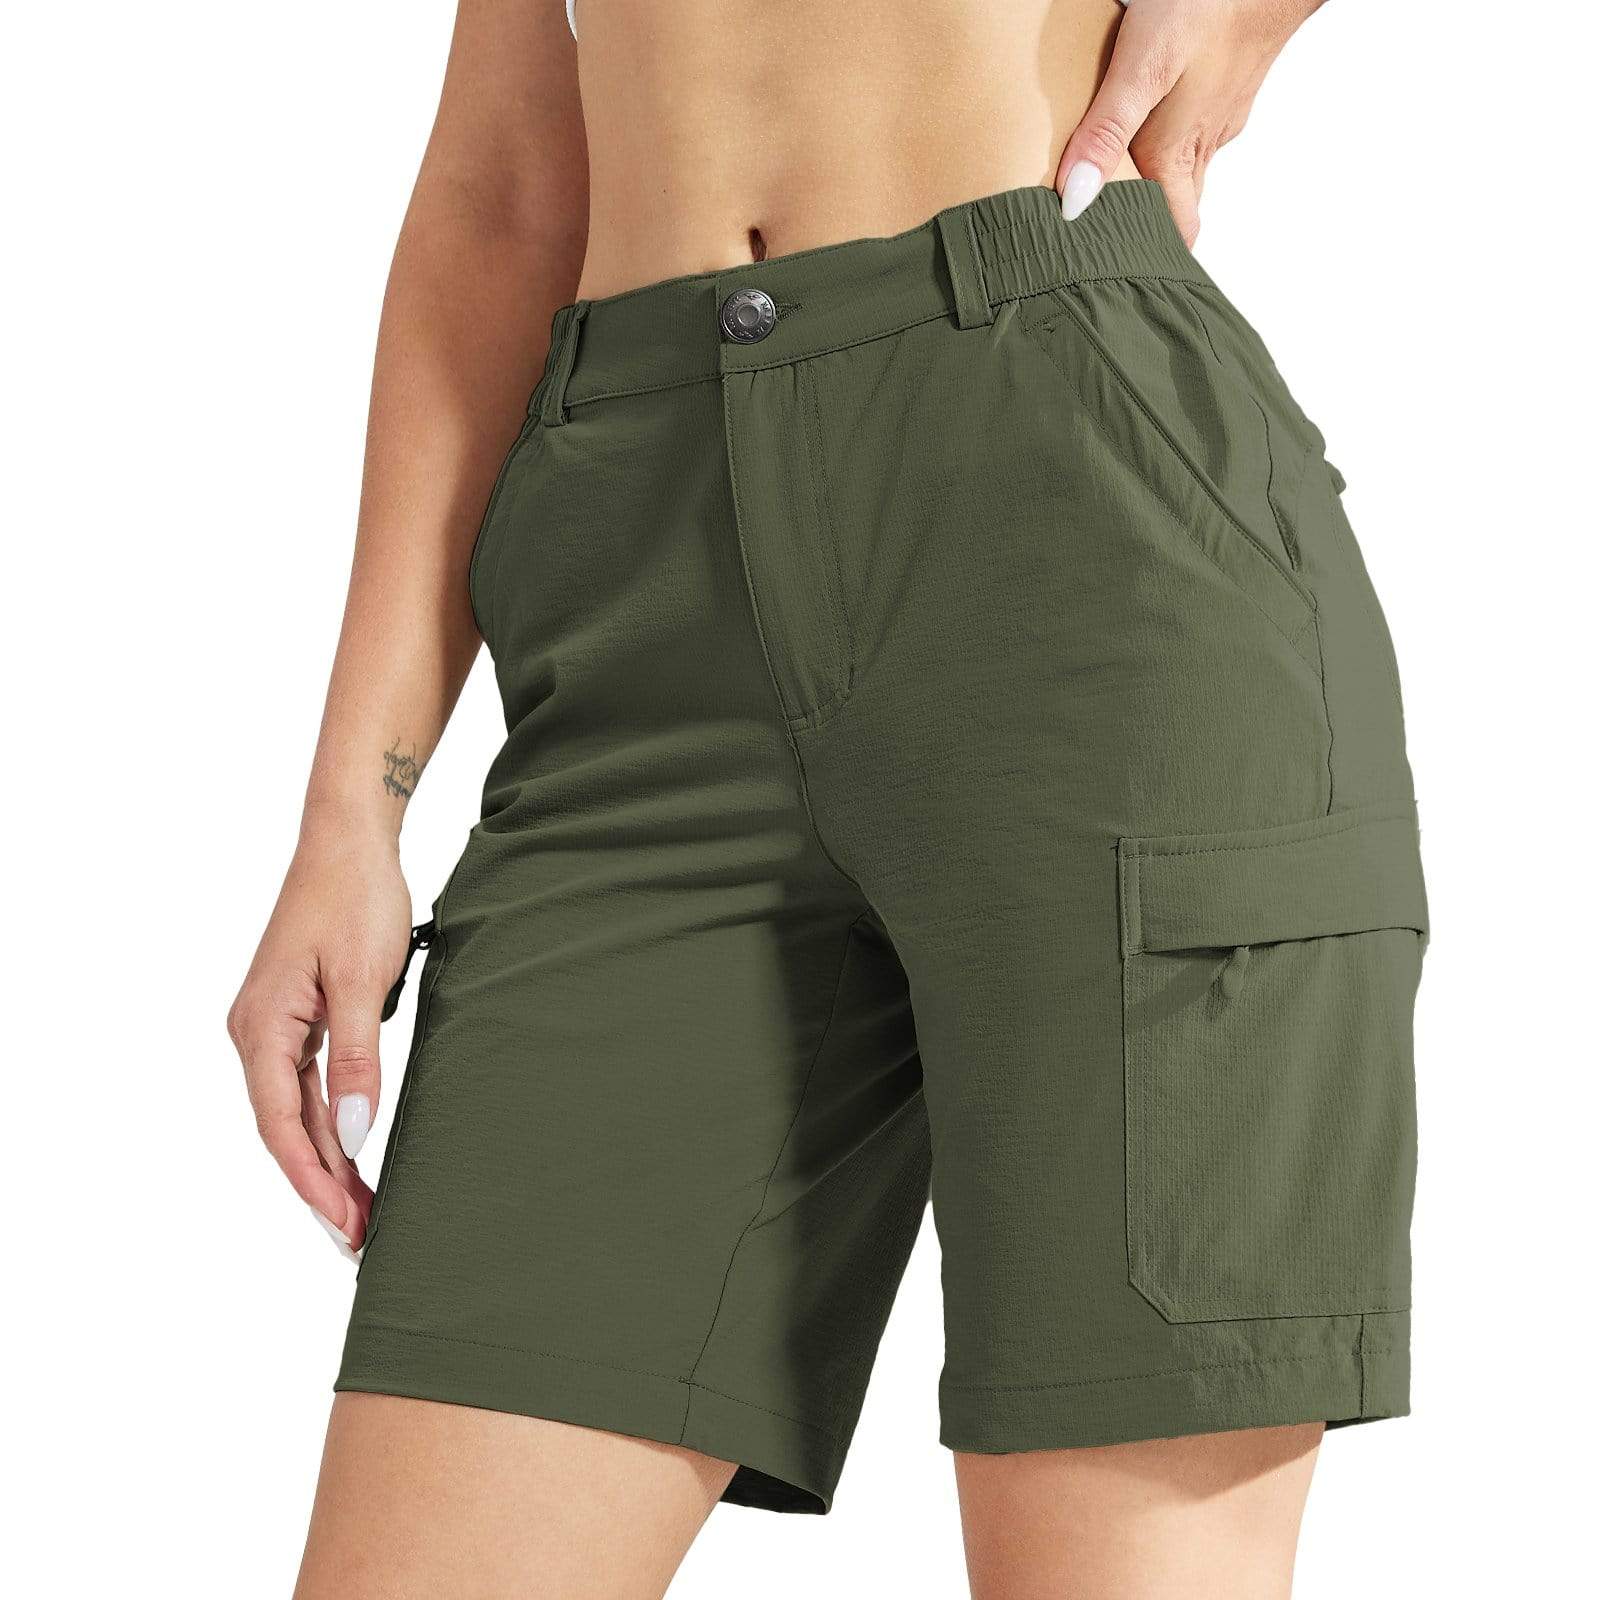 Women's Tek-Trek Breathable Outdoor Hiking Shorts SHORTS 2 / Army Green MIER